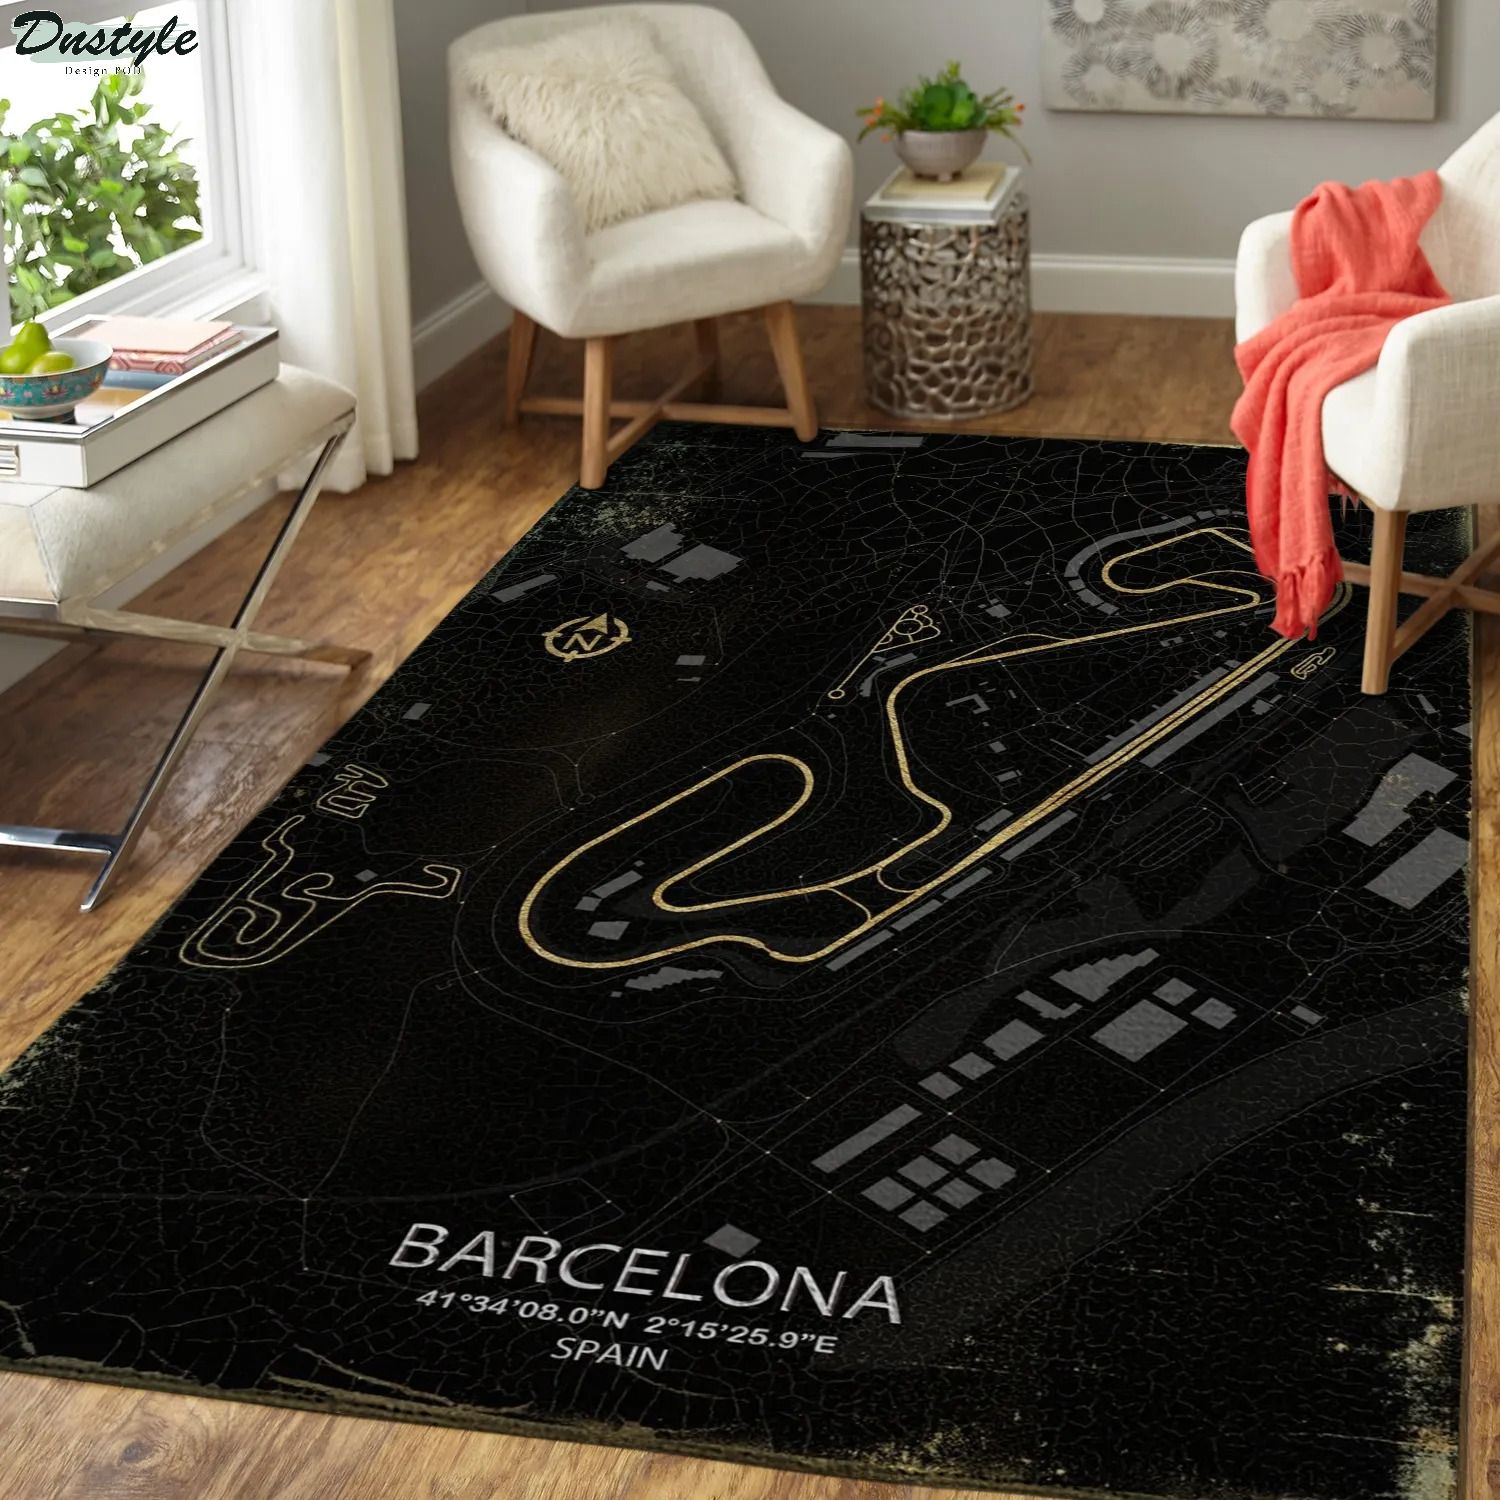 Barcelona spain f1 track rug 2